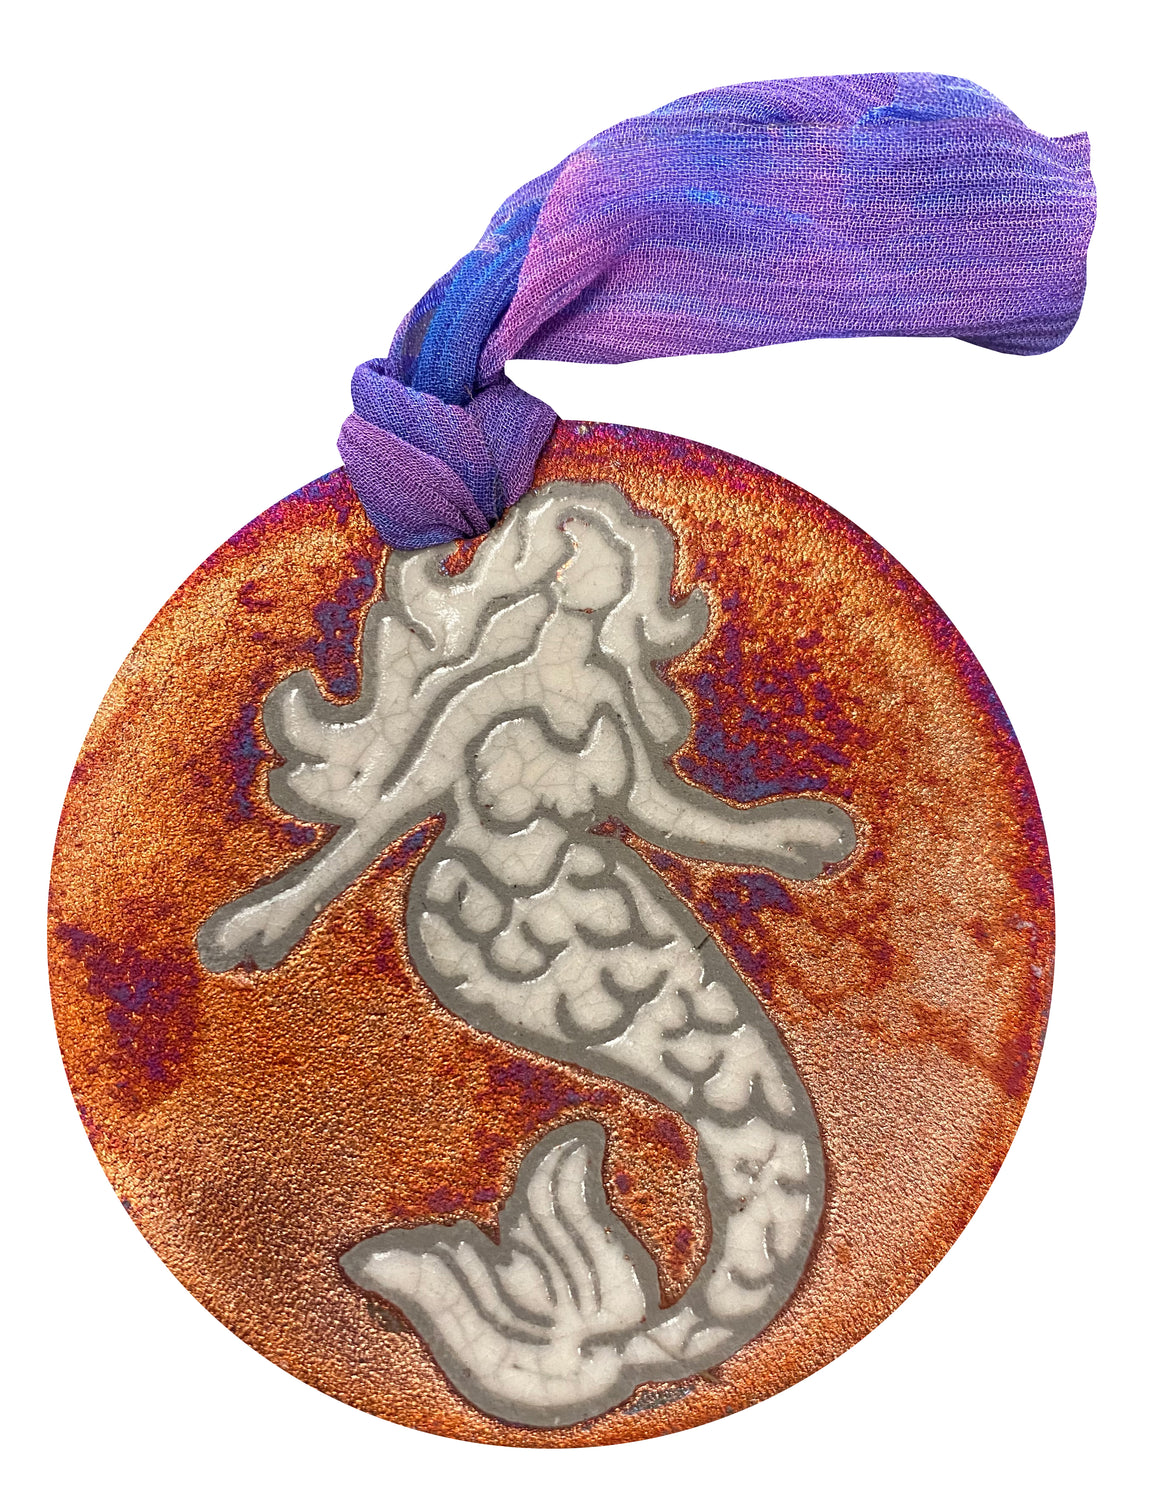 Mermaid Silhouette Medallion Ornament from Raku Pottery